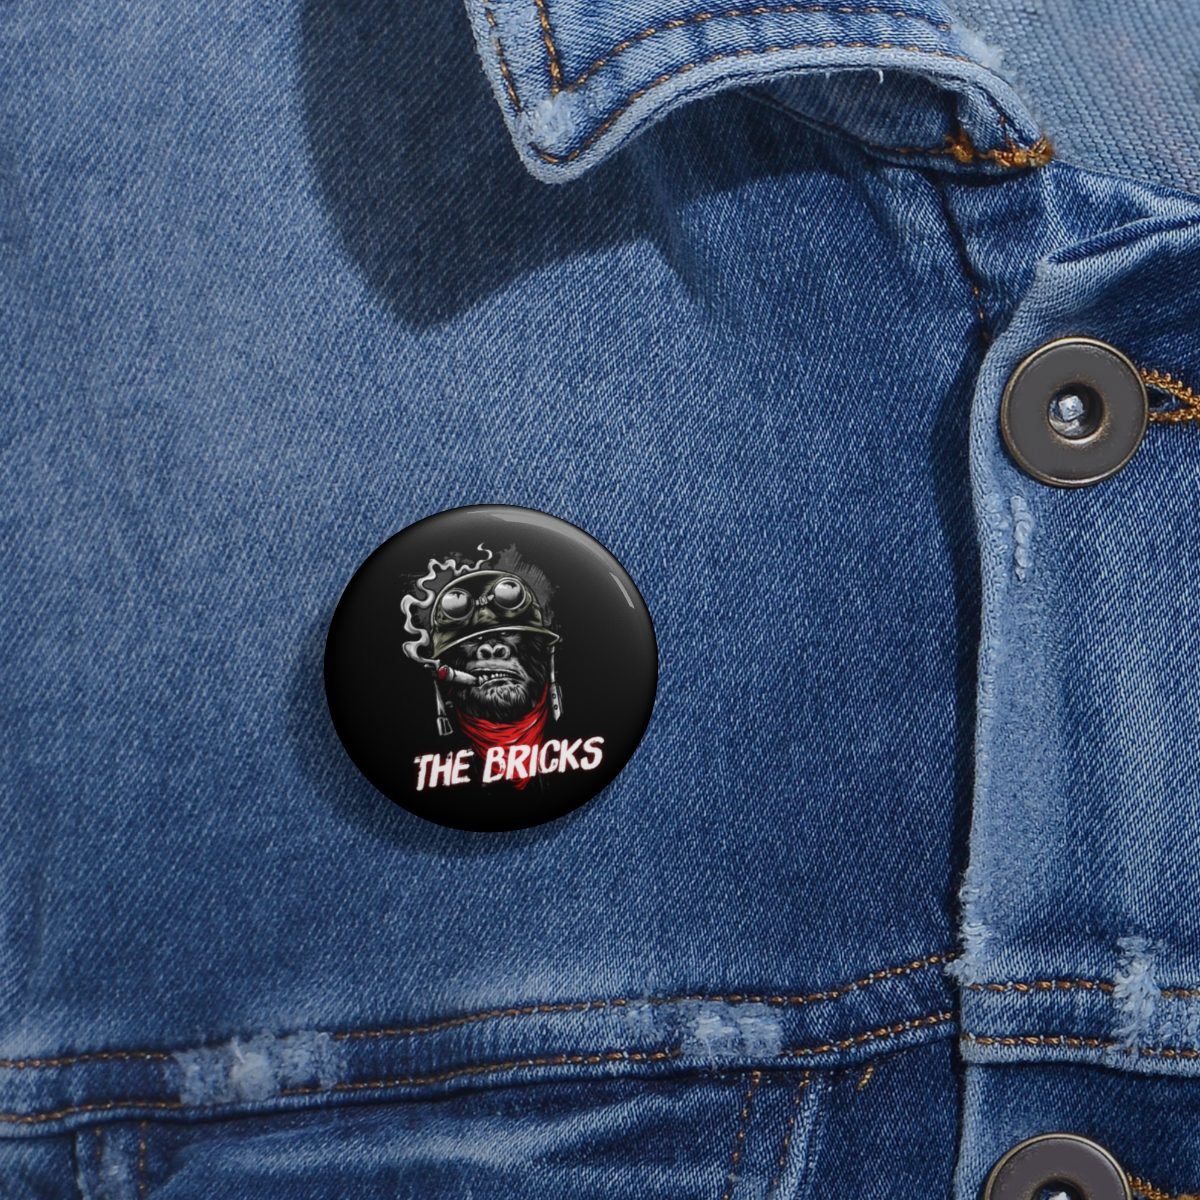 The Bricks – Gorilla Pin Buttons